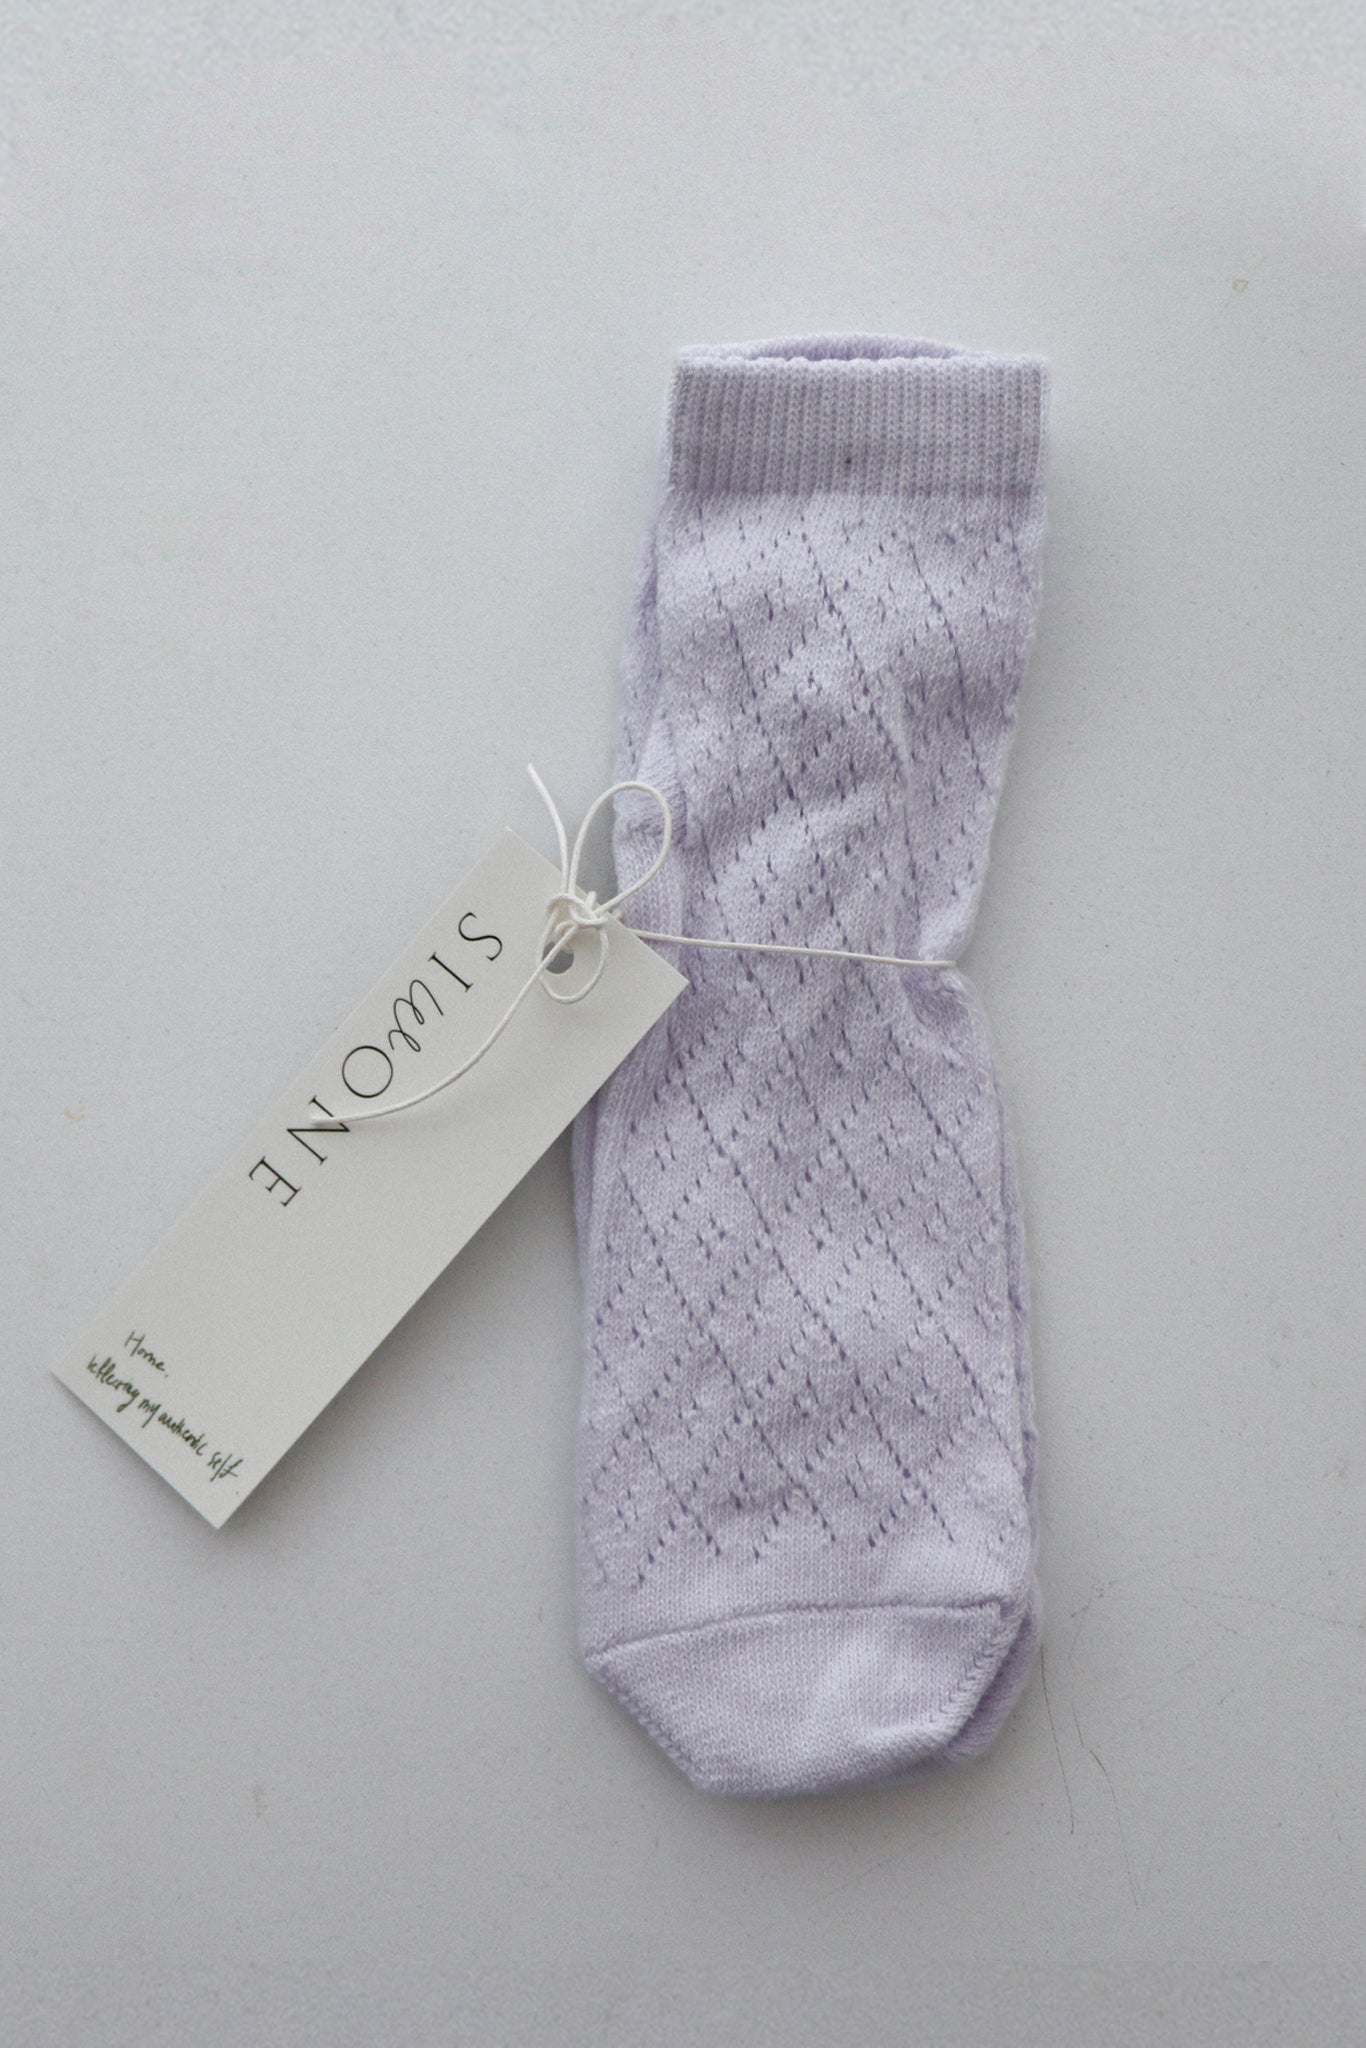 Lavender lace socks